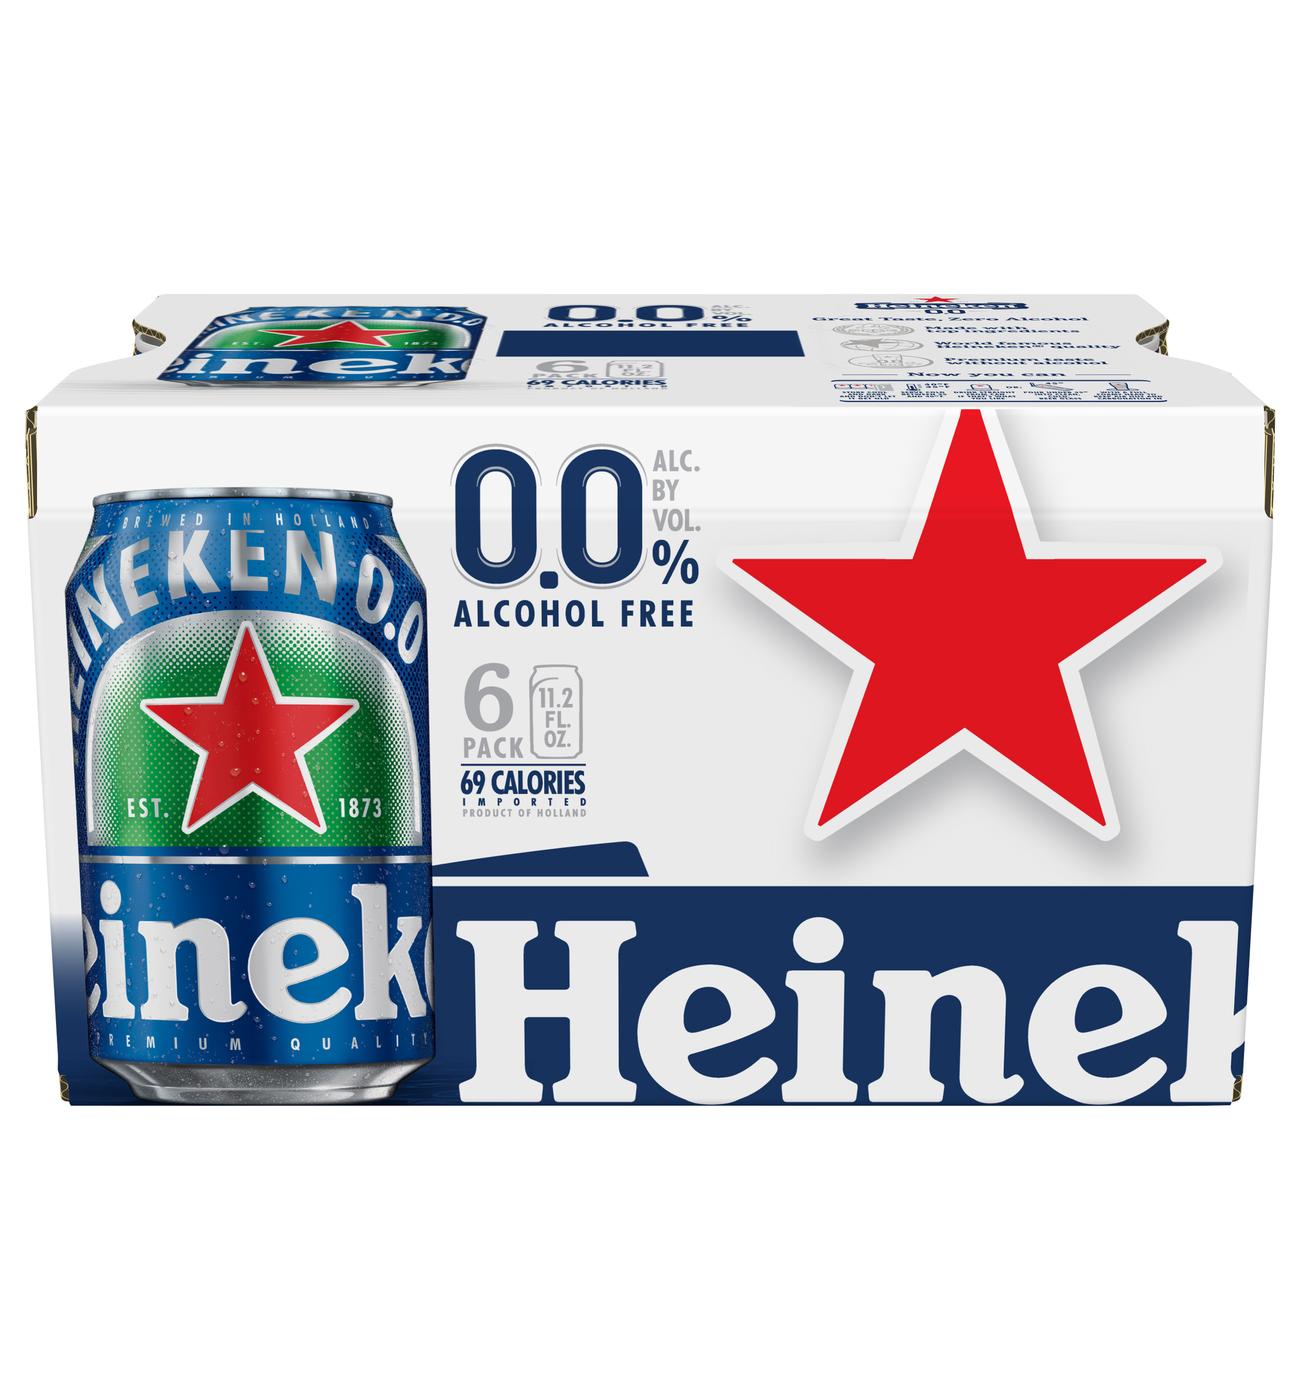 Heineken 0.0% Alcohol Free Beer 11.2 oz Cans; image 1 of 2